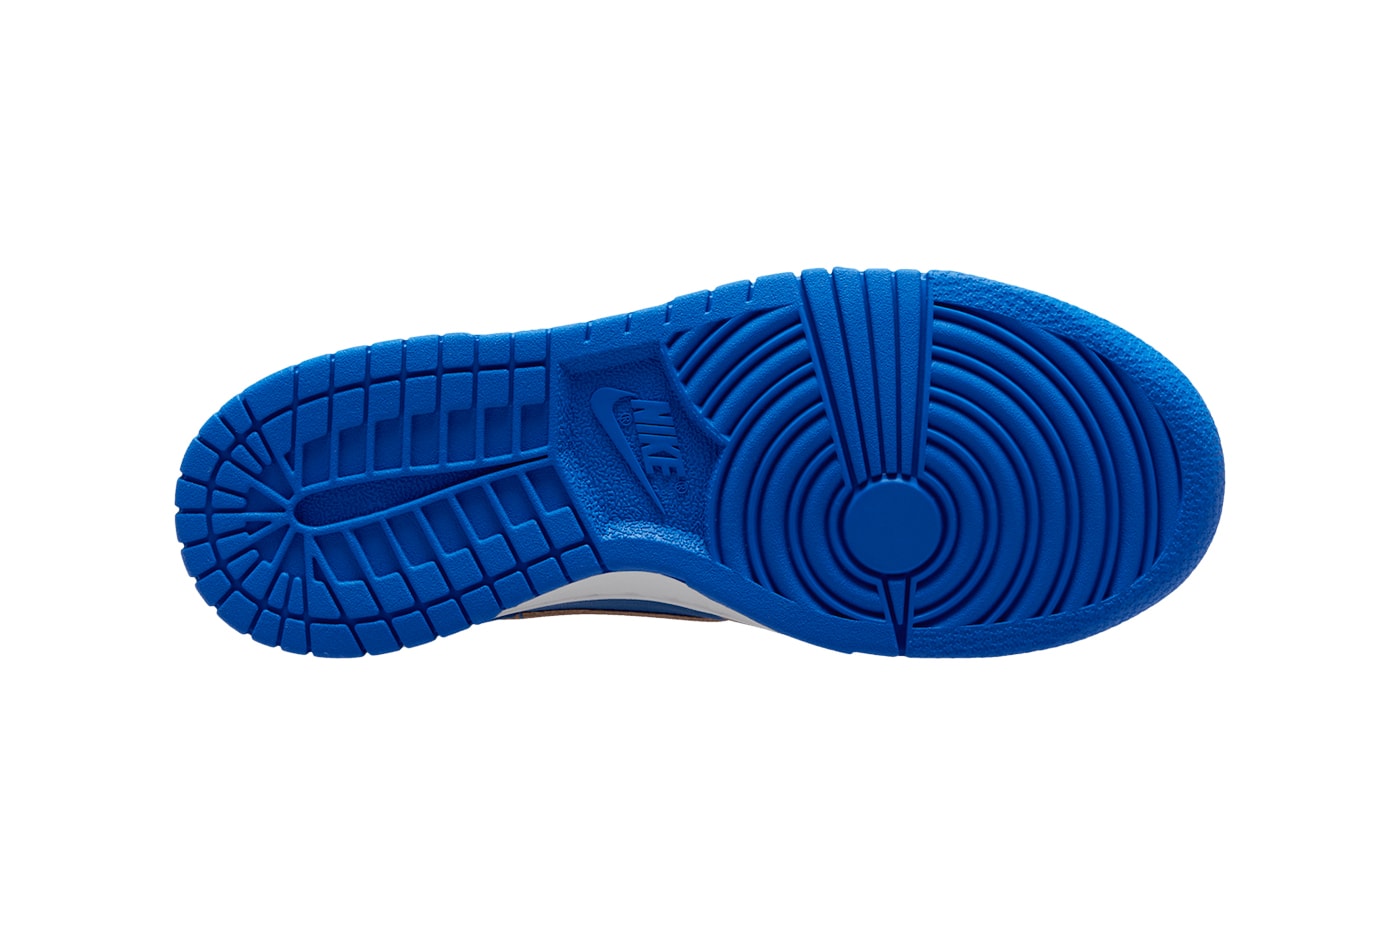 Nike Dunk Low gs salmon toe game royal sail light magenta dz2873 400 release info date price